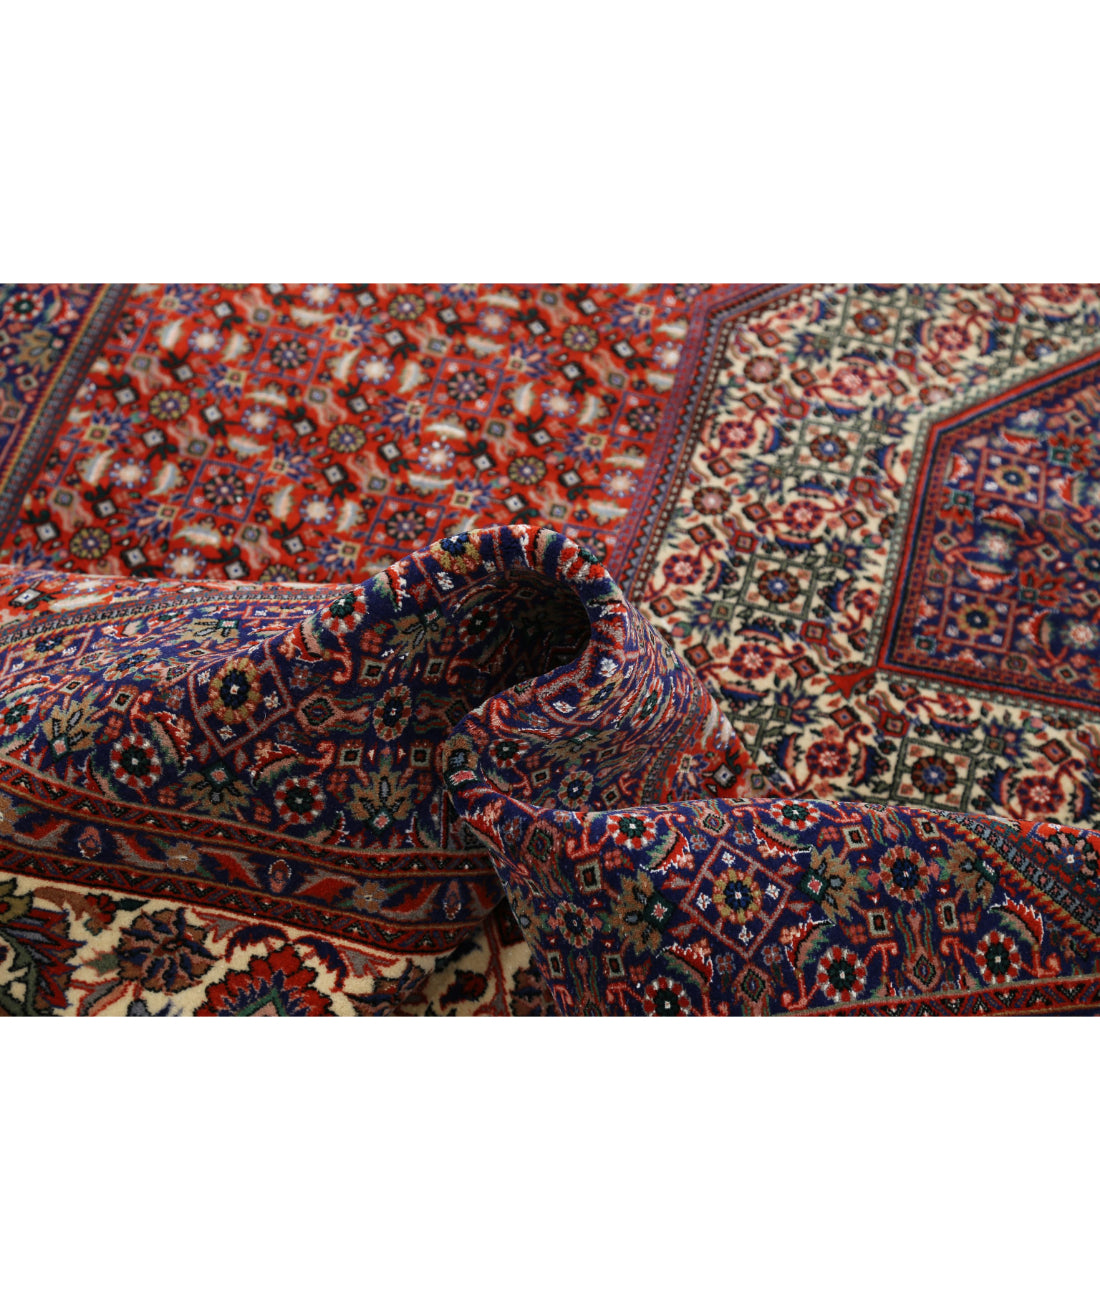 Hand Knotted Persian Bijar Wool Rug - 6'7'' x 9'11'' 6'7'' x 9'11'' (198 X 298) / Red / Ivory